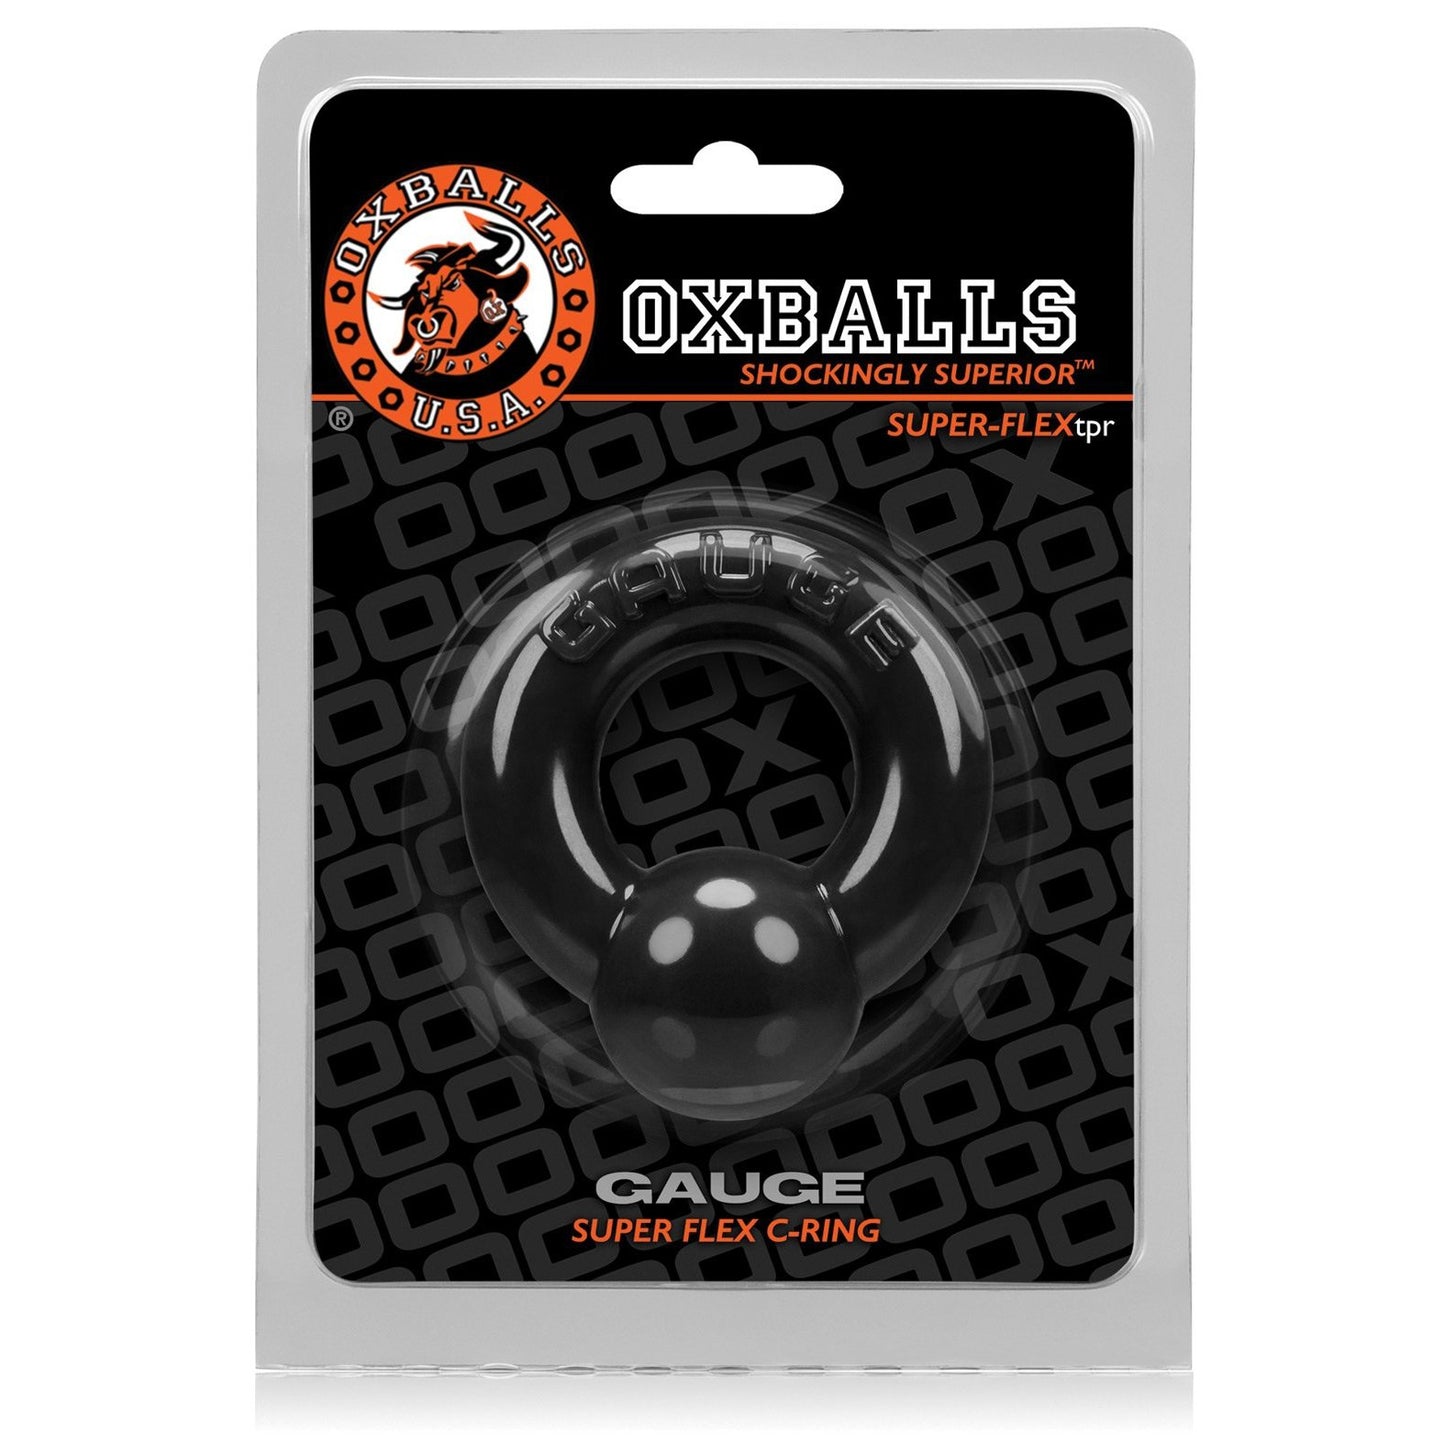 Oxballs Gauge Cockring